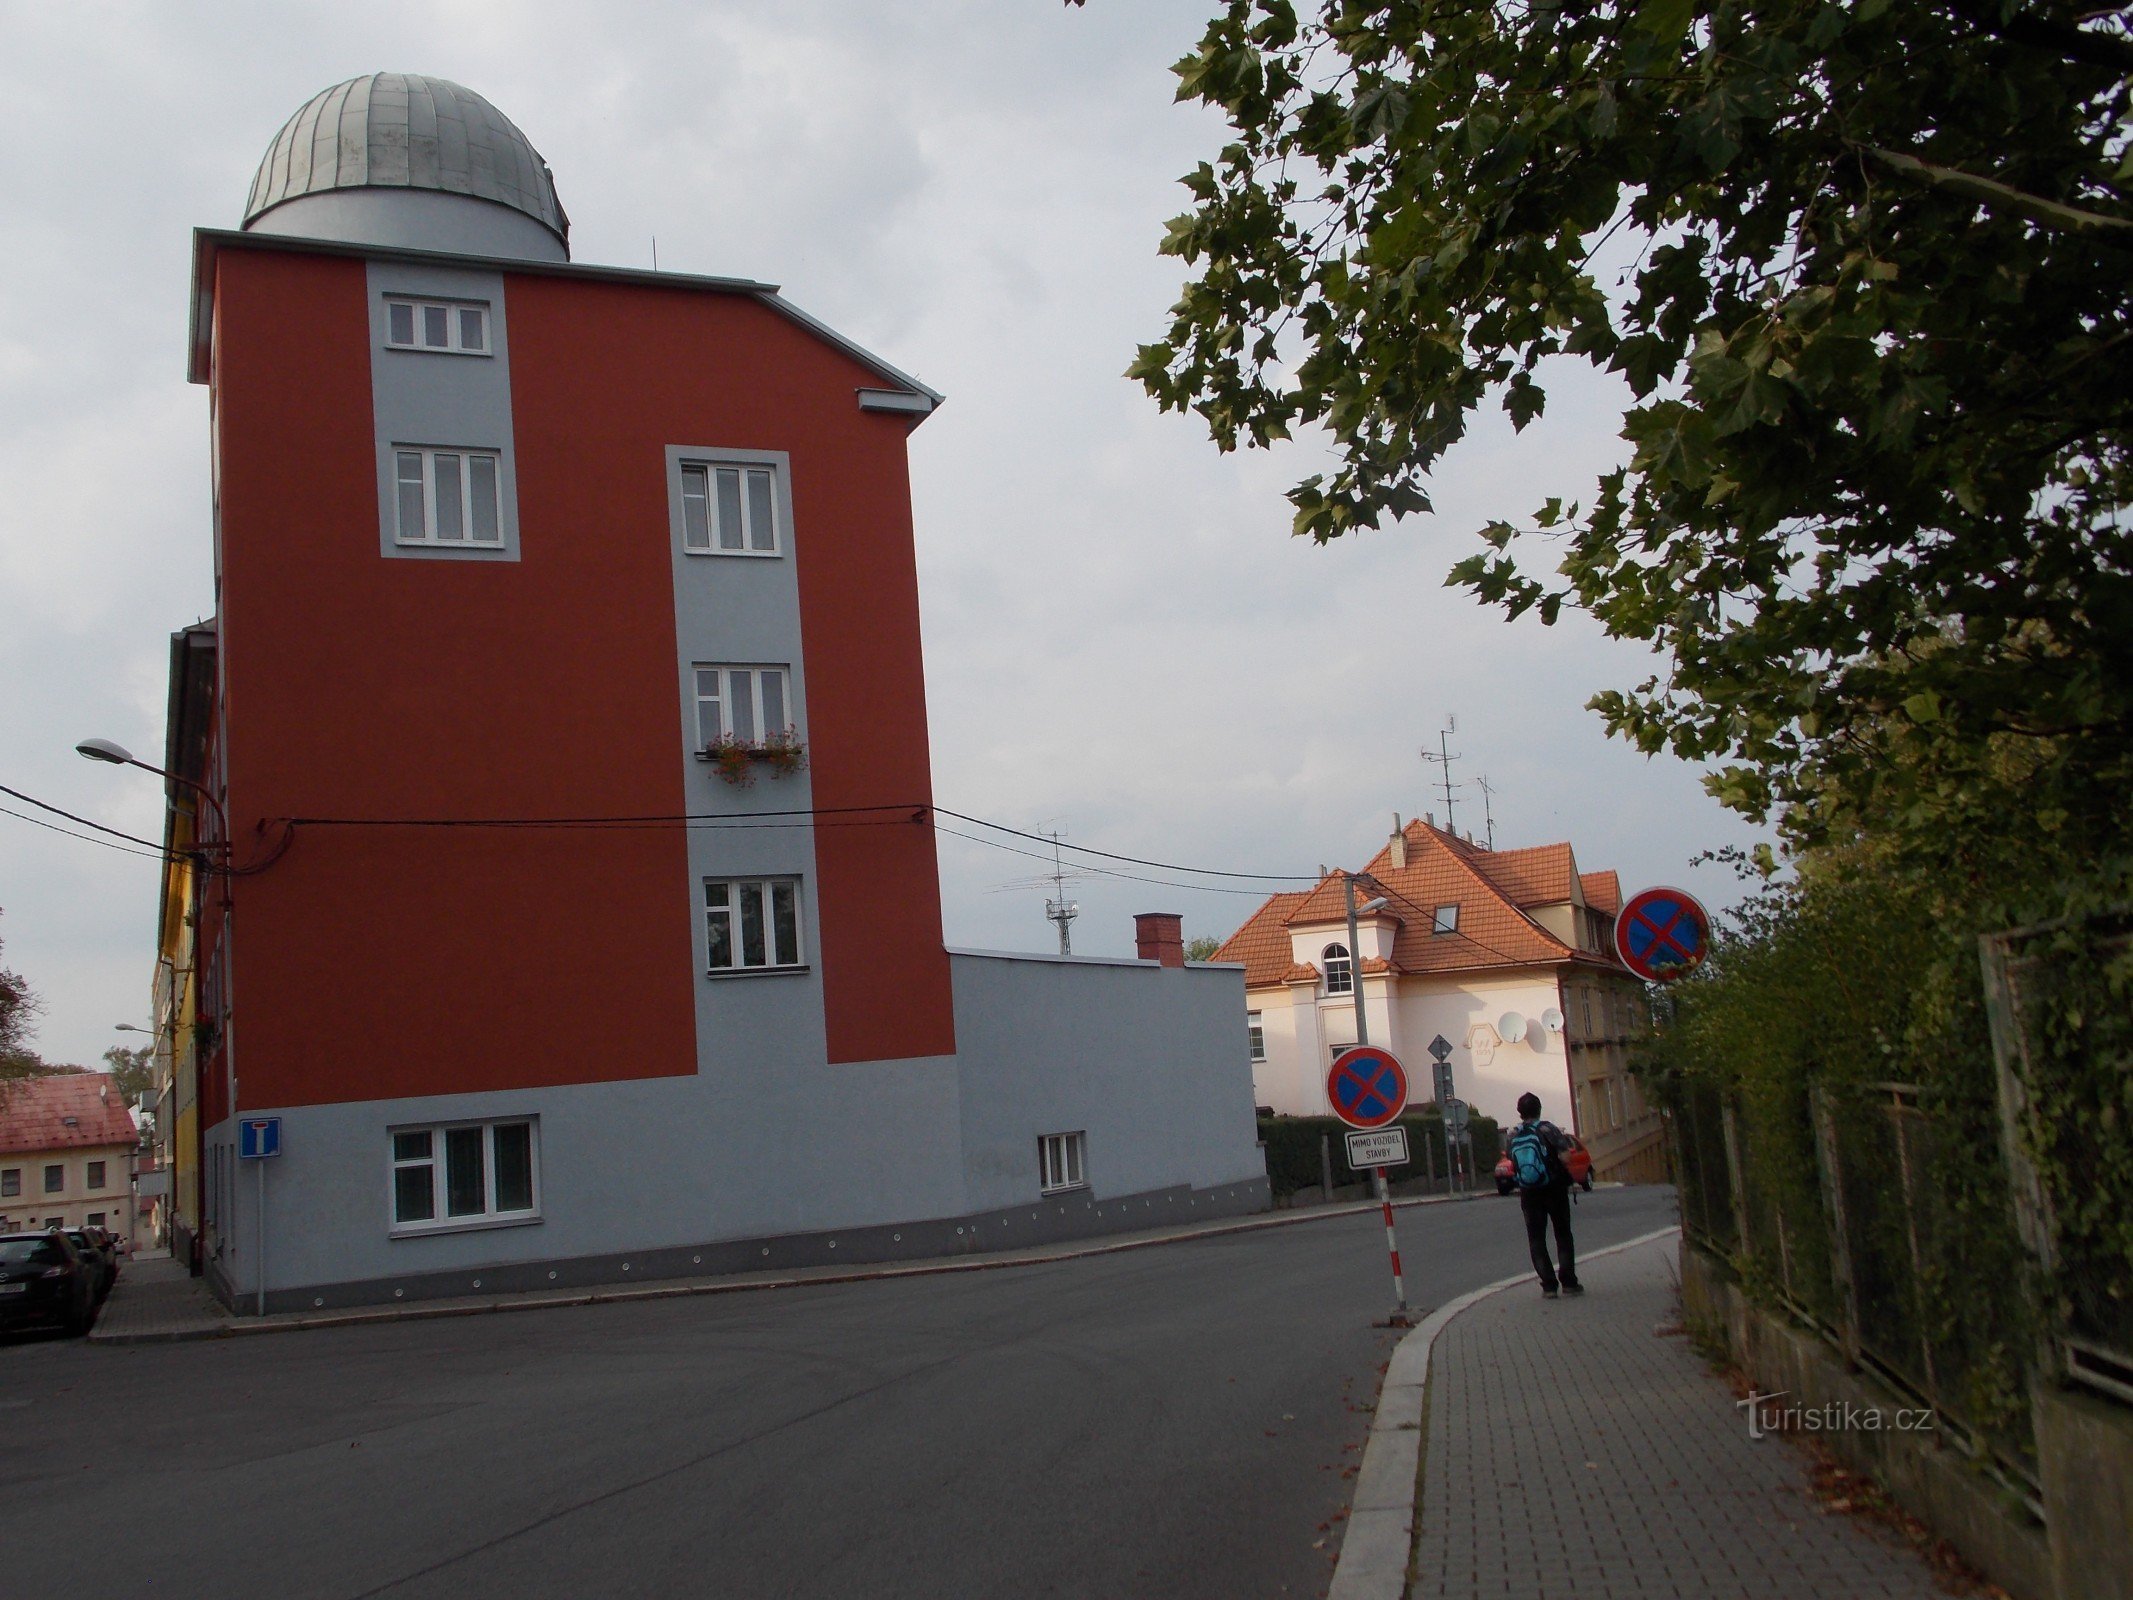 Het ter ziele gegane observatorium in Nové Jičín